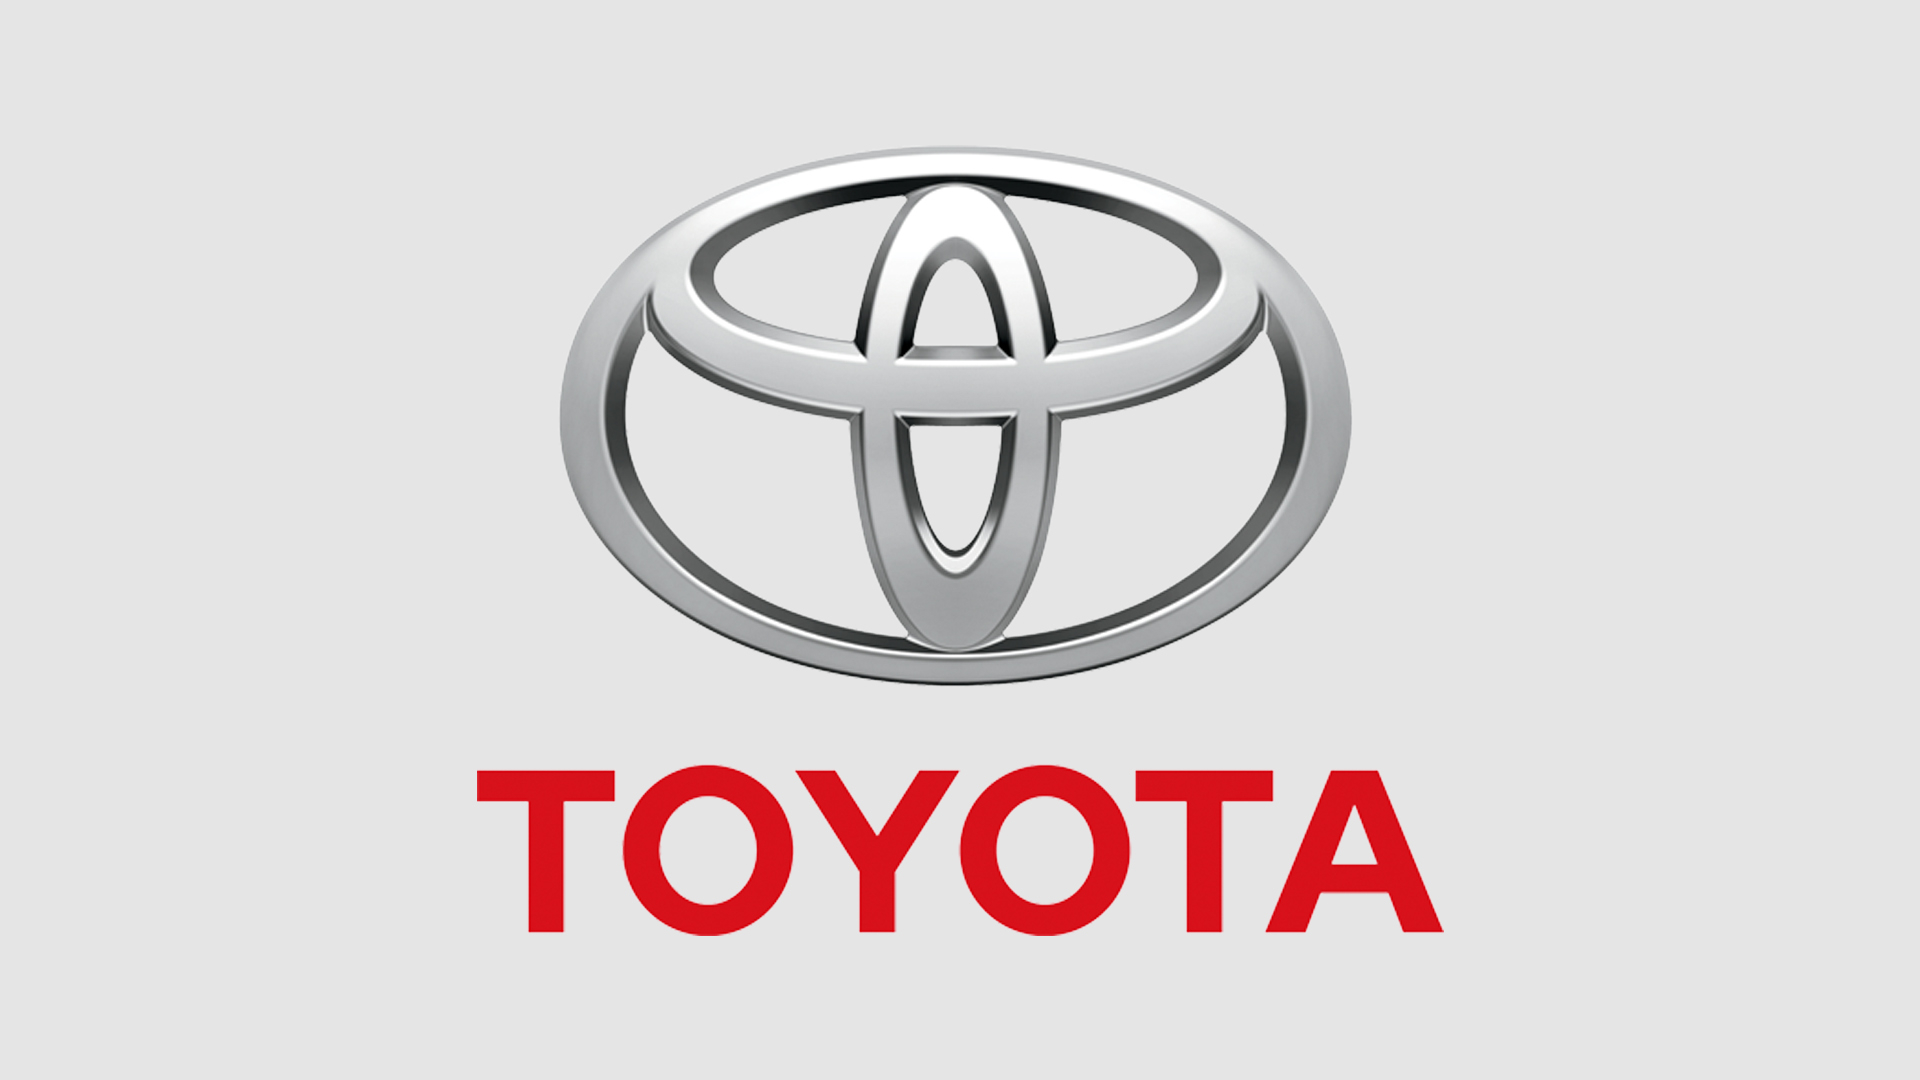 1920x1080 The Toyota logo has an ingenious hidden message | Creative Bloq